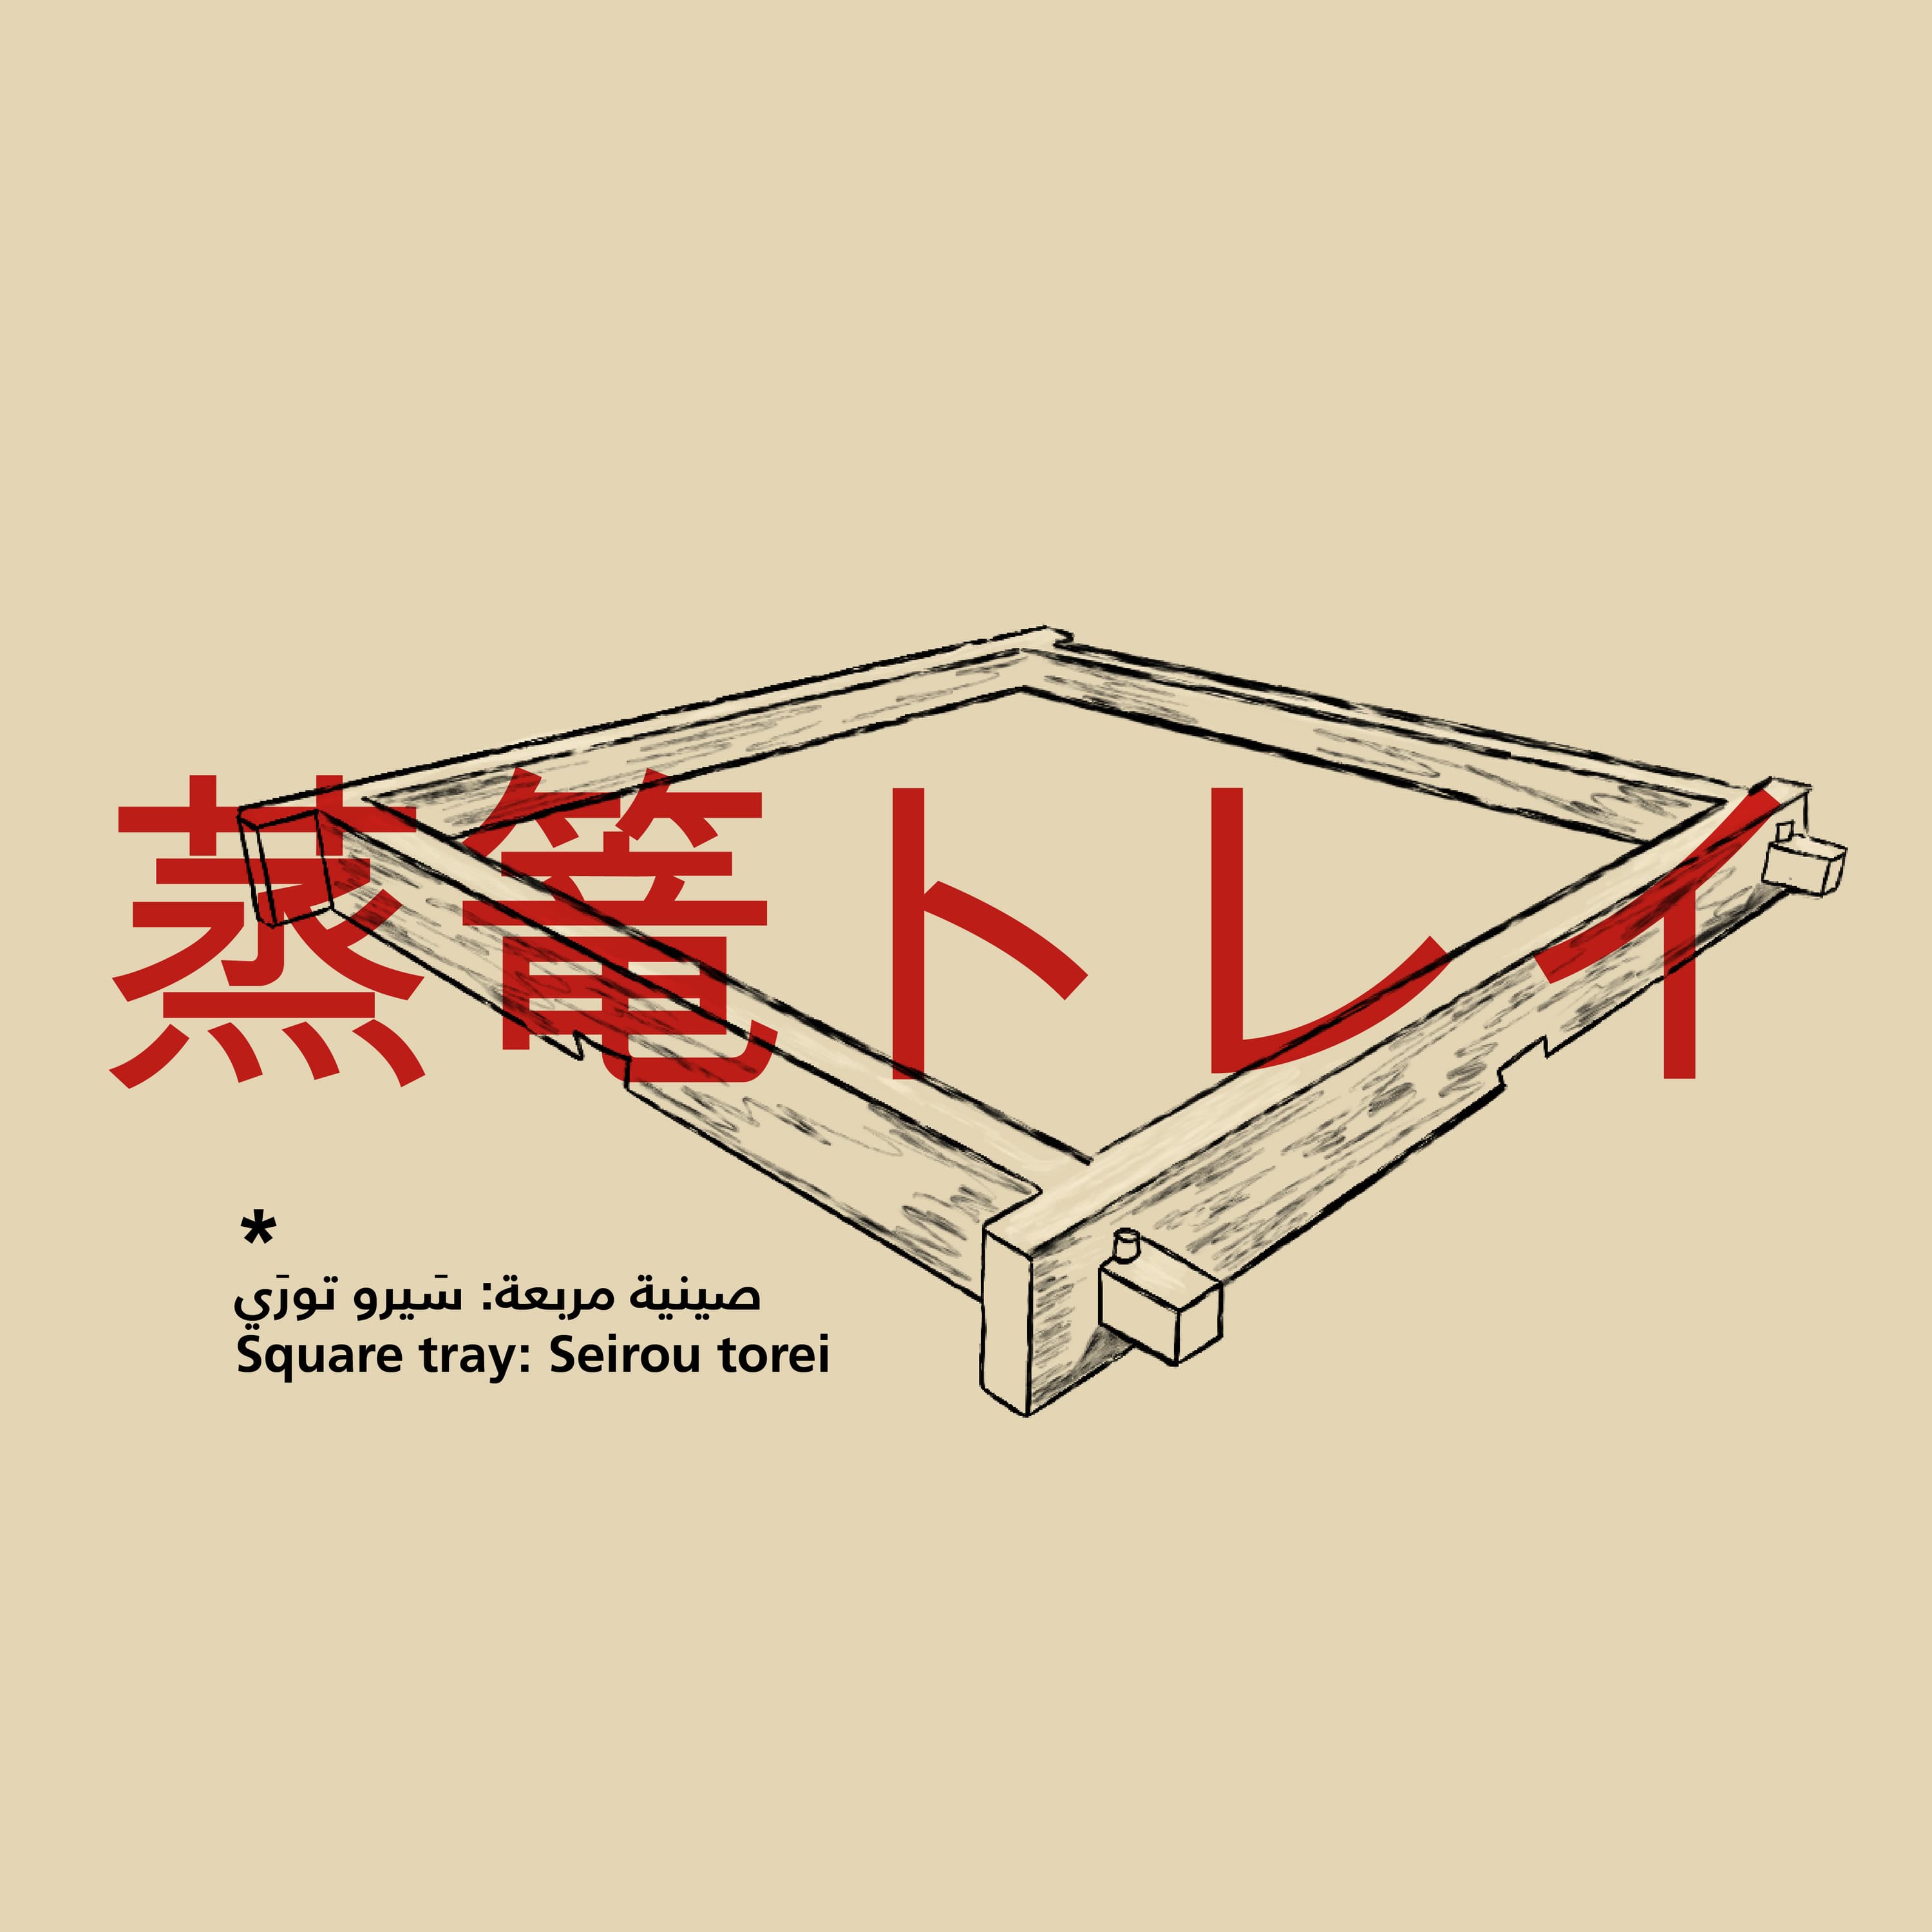 Japanese Woodwork: Seirou torei (蒸篭トレイ) – Square tray